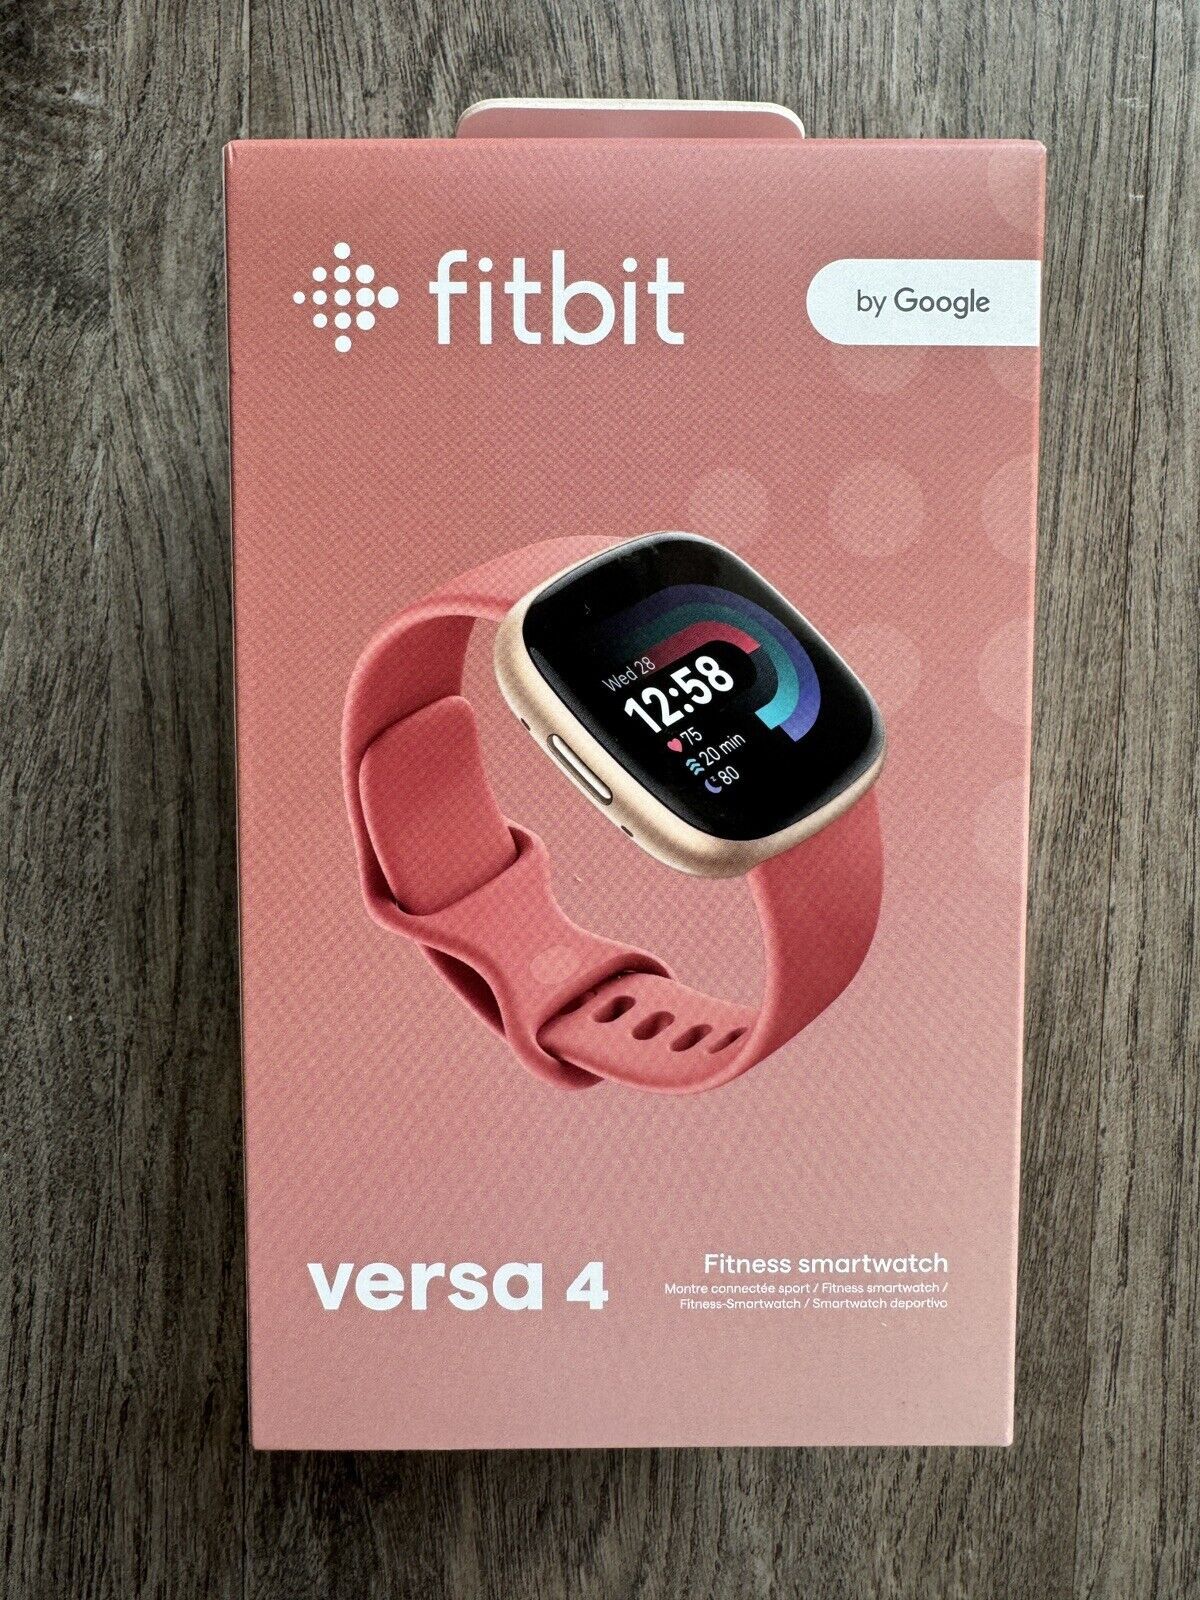 NEW Sealed FitBit Versa 4 Fitness Smartwatch - Pink